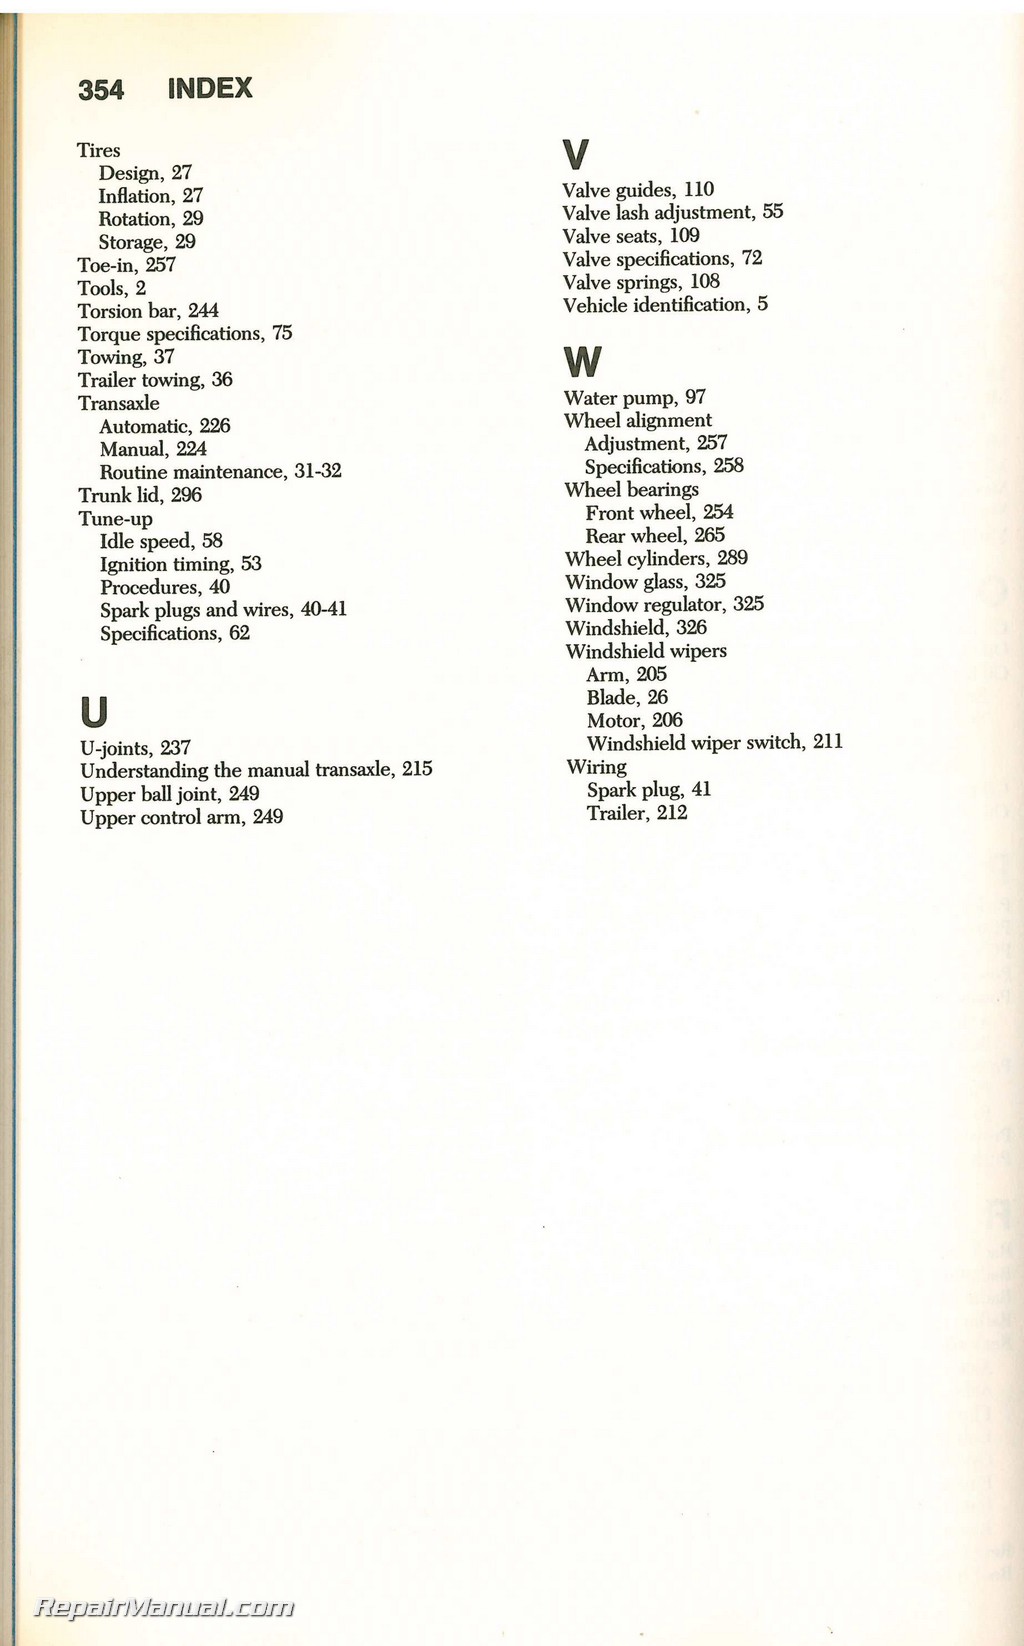 1990 Honda civic manual pdf #7